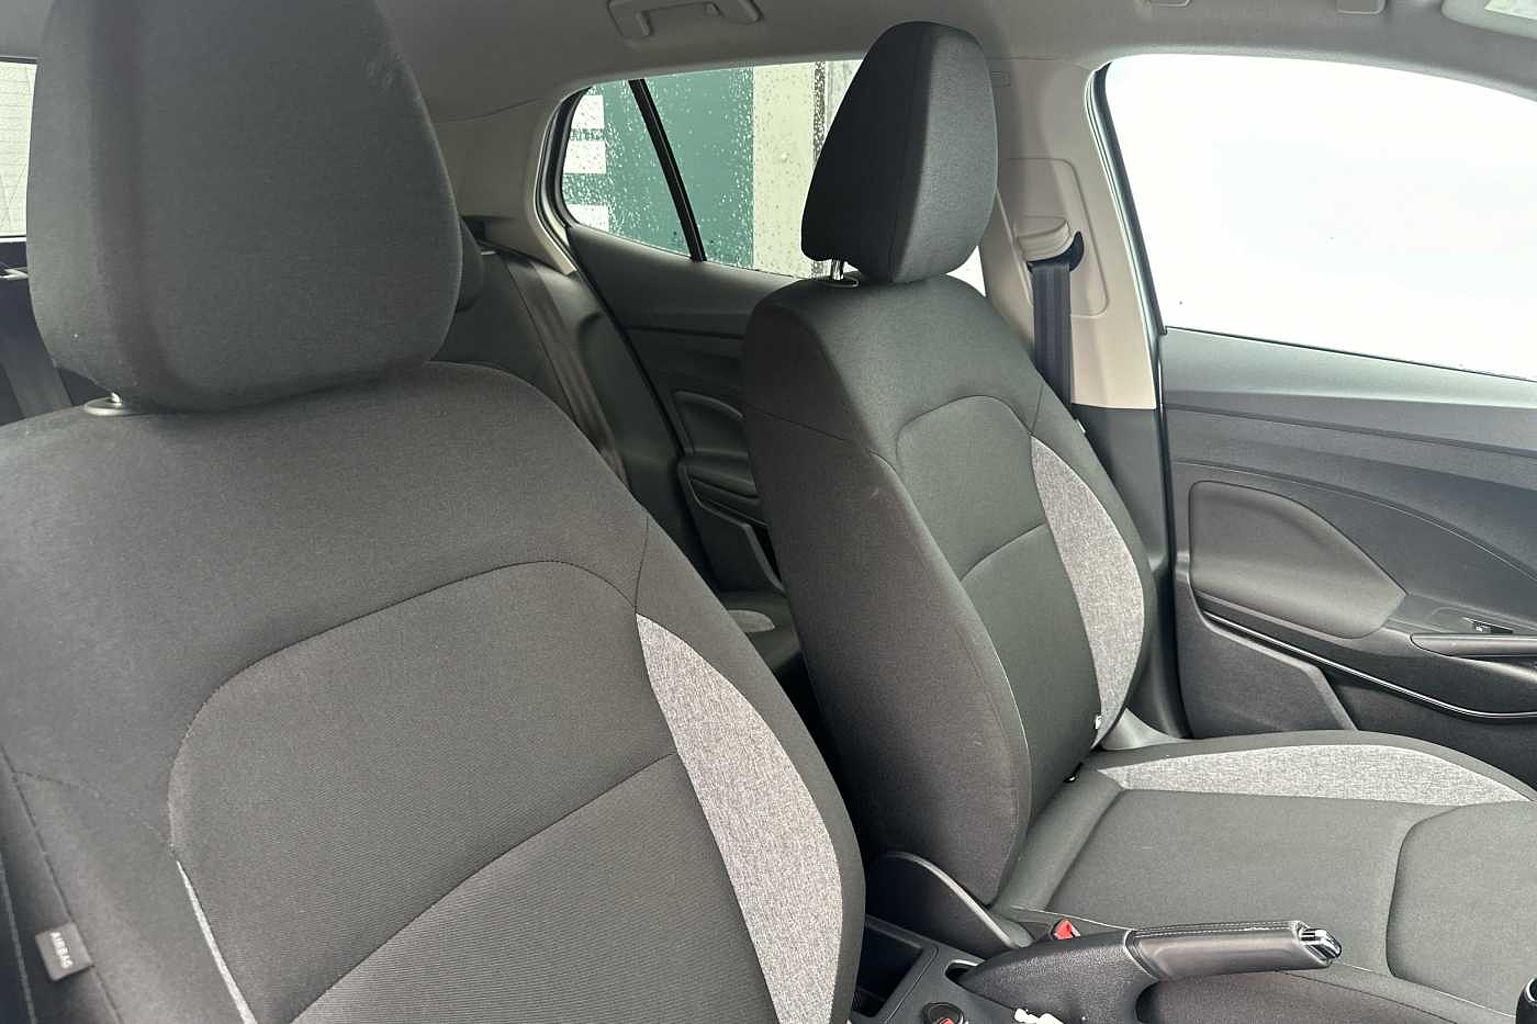 SKODA Fabia 1.0 TSI (110ps) SE Comfort Hatchback *LEZ Compliant*